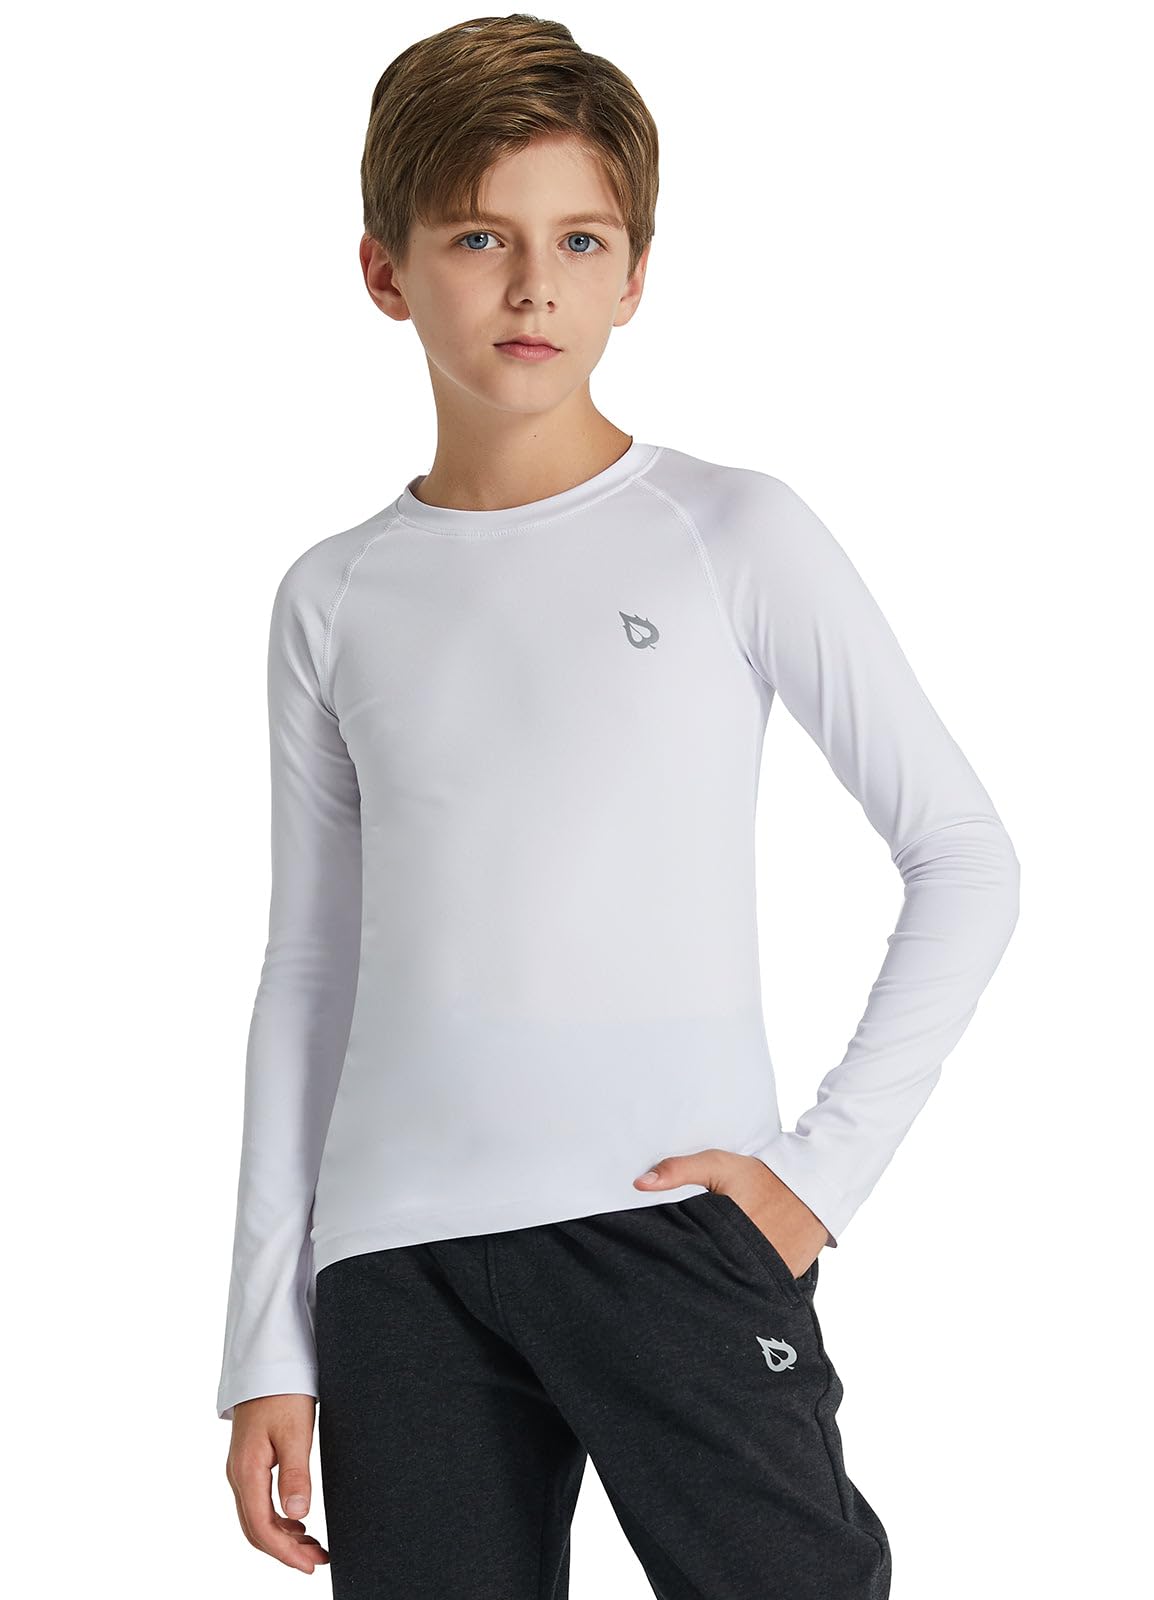 BALEAF Boys Compression Shirt Long Sleeve Youth Undershirts Kids Football Baseball Baselayer Cold Gear Quick Dry White Size M